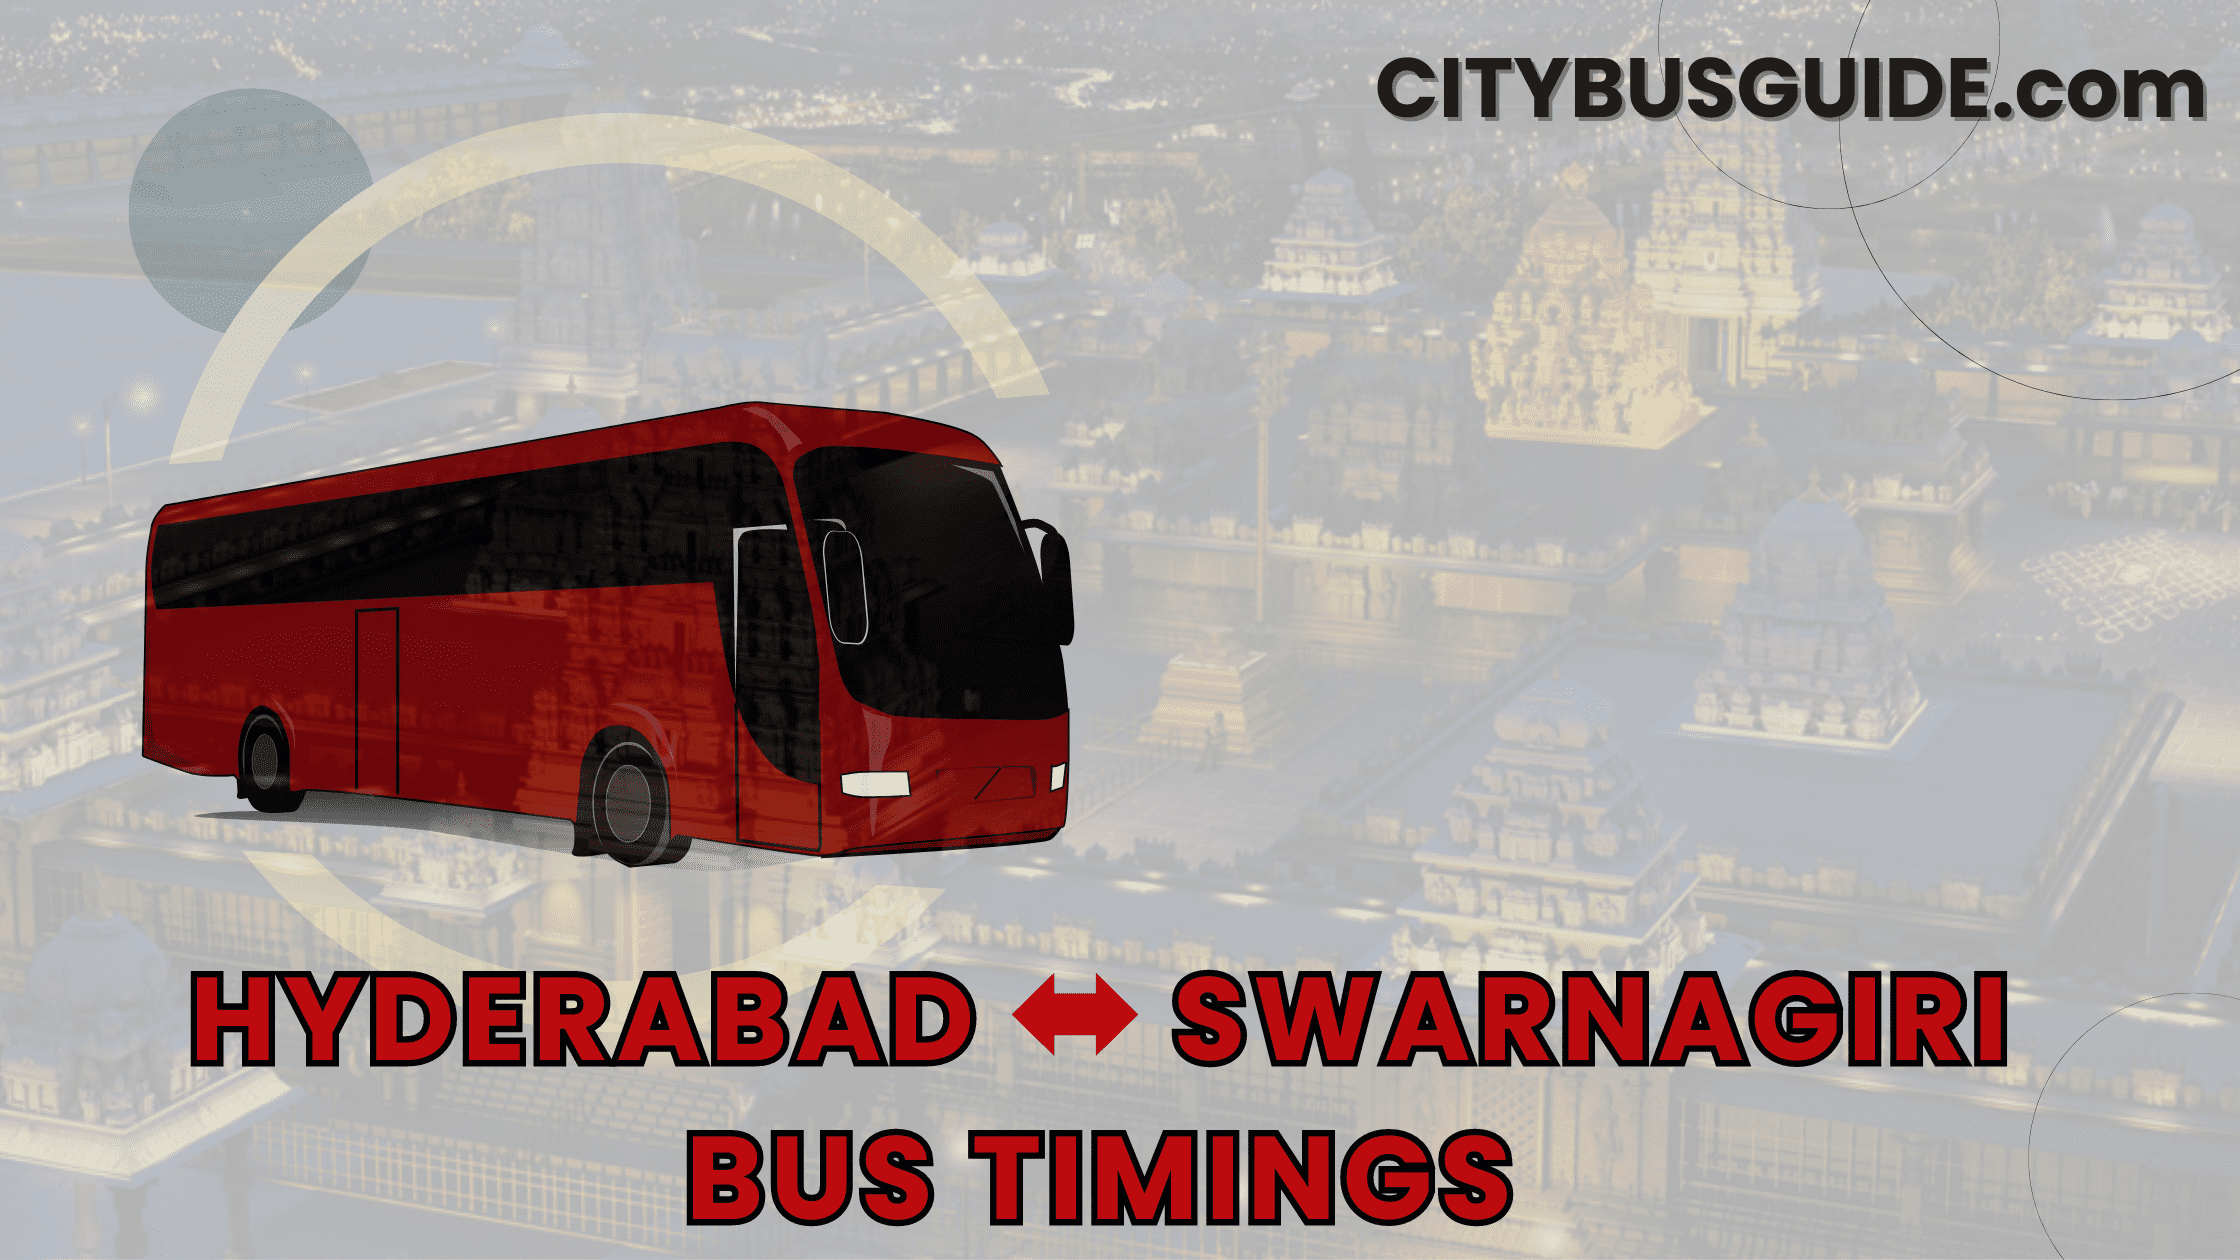 Hyderabad to Swarnagiri Bus Timings, Distance & Ticket Price